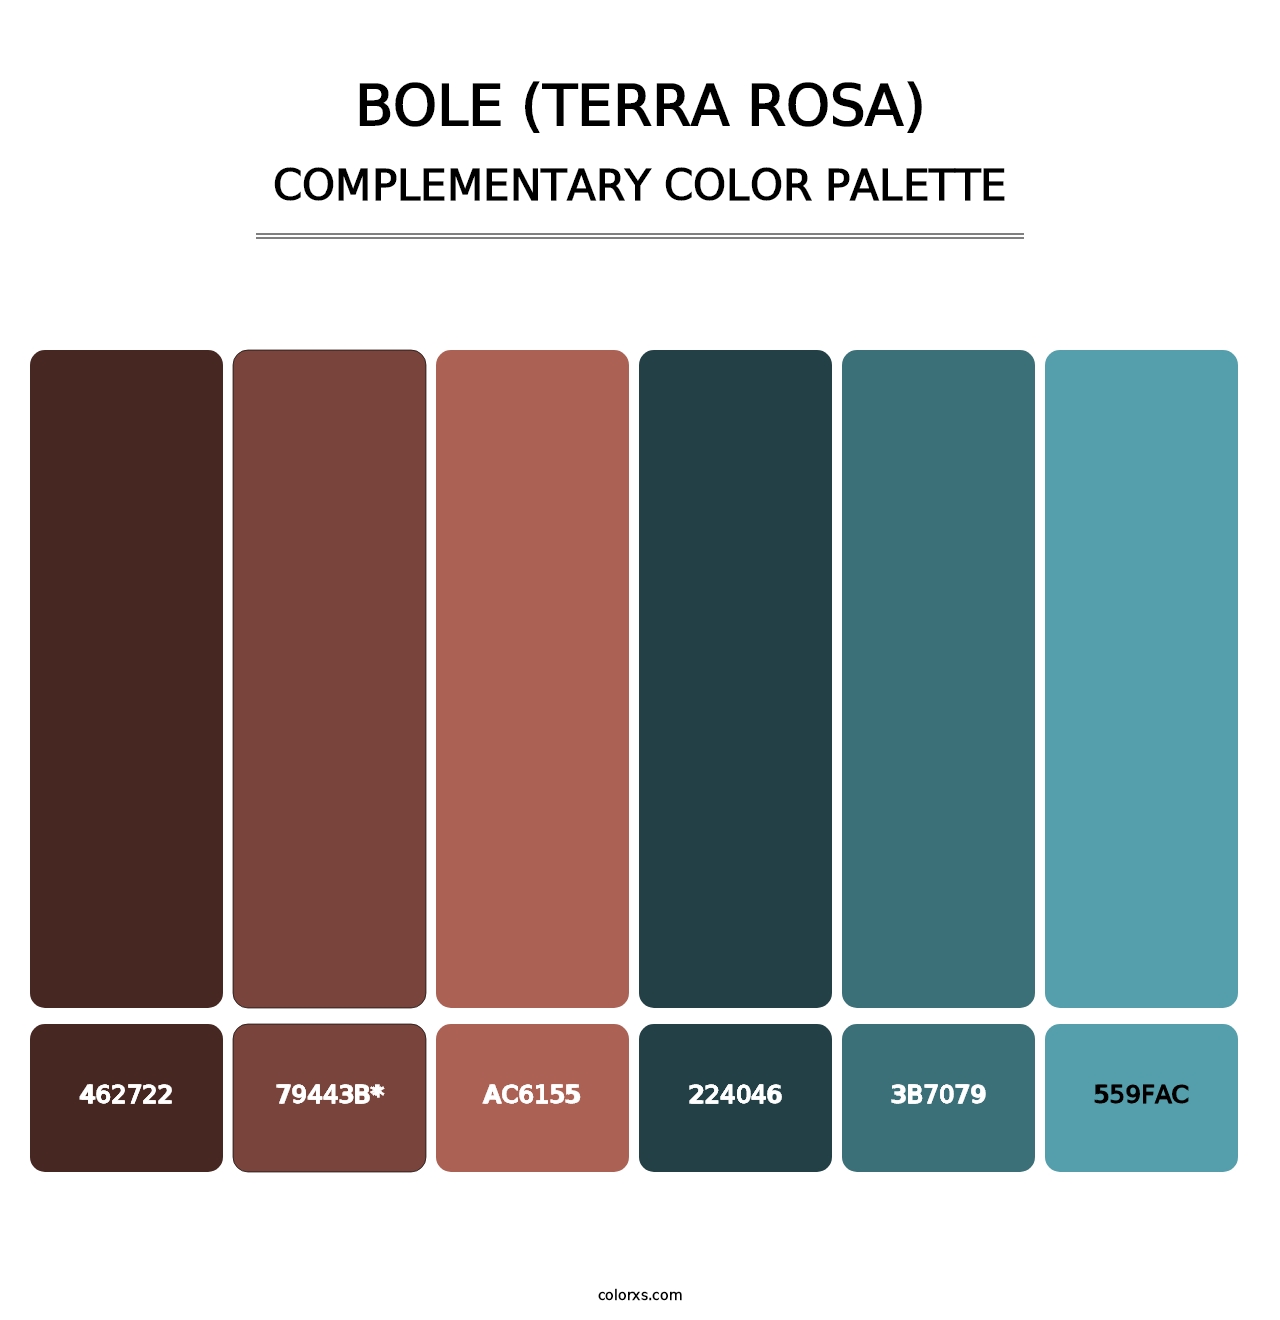 Bole (Terra Rosa) - Complementary Color Palette